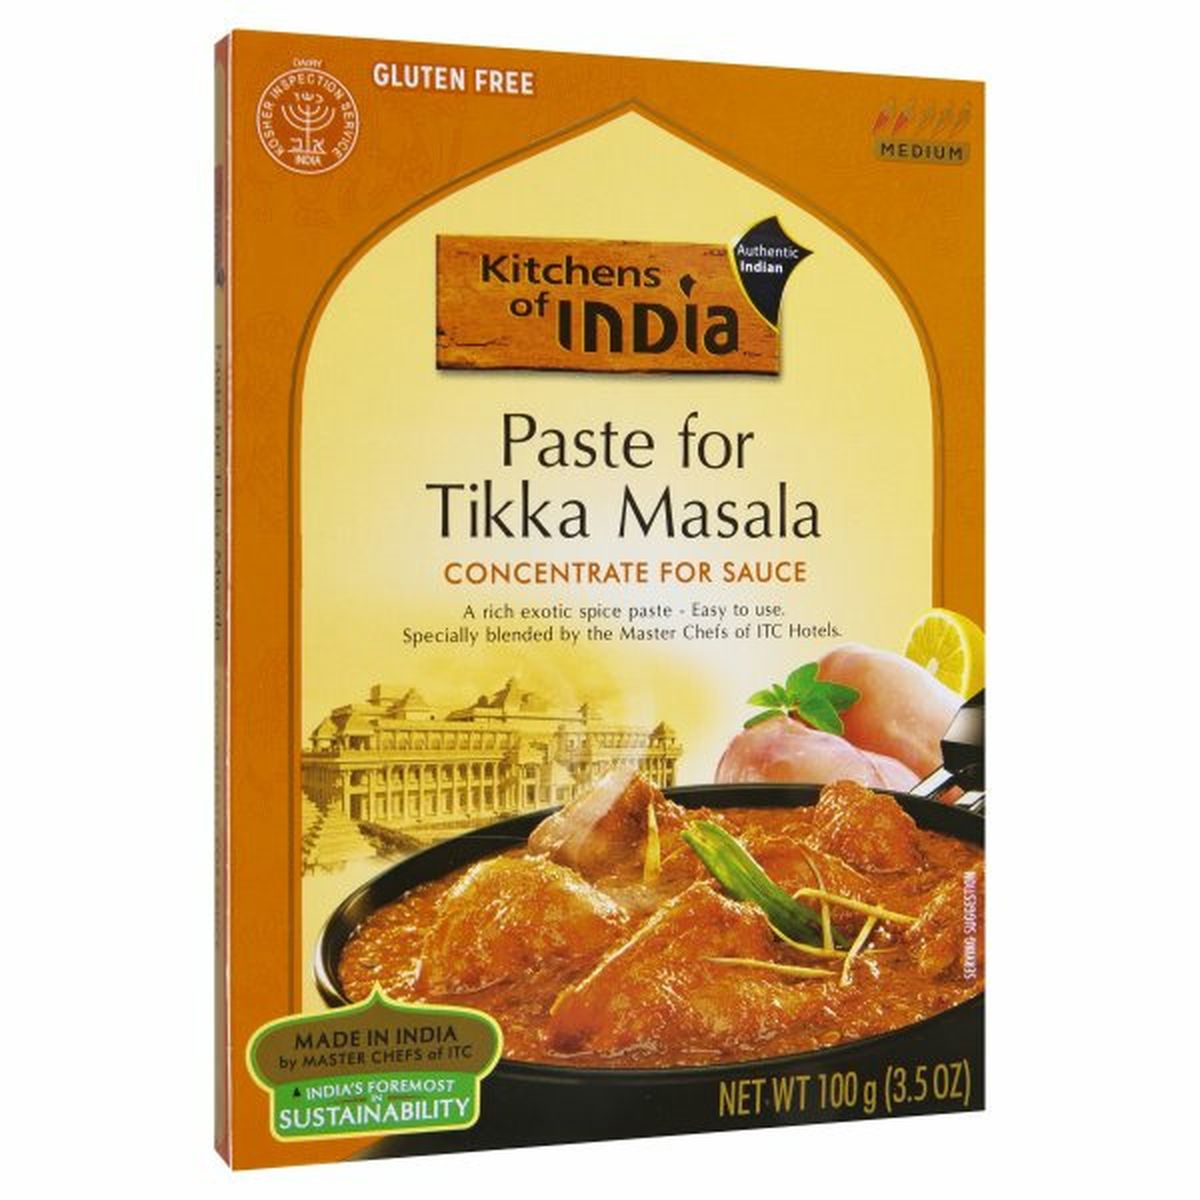 Calories in Kitchens of India Paste for Tikka Masala, Medium